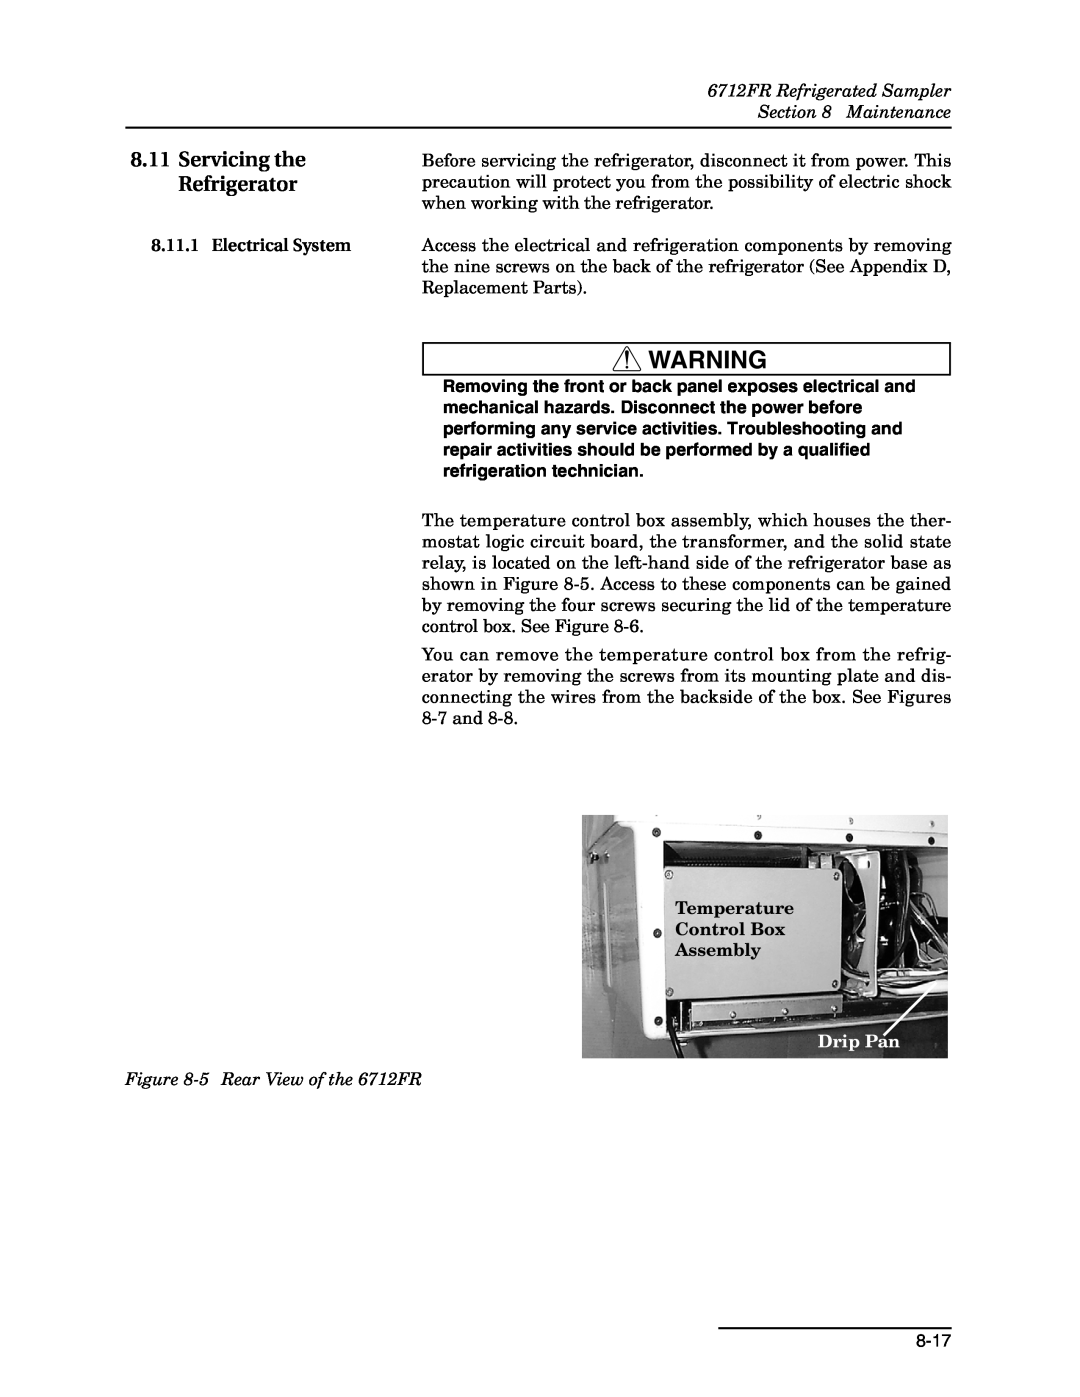 Teledyne manual Servicing the Refrigerator, 6712FR Refrigerated Sampler Maintenance, Electrical System, Drip Pan 